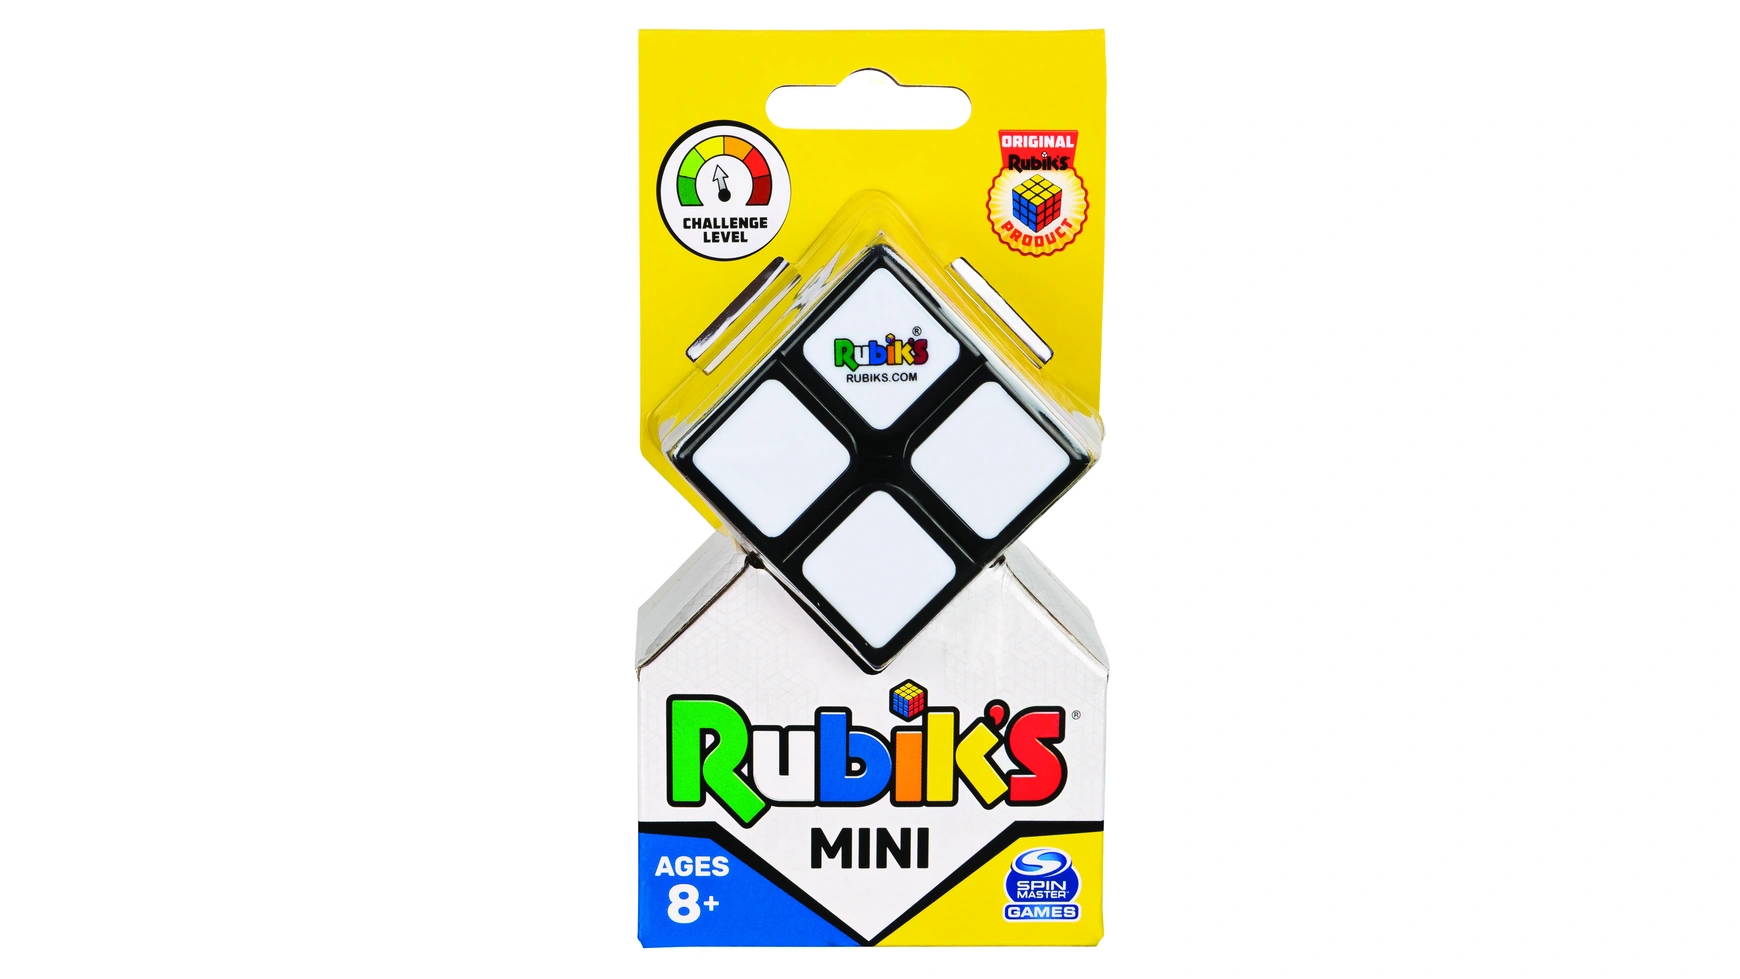 Rubik's Mini 2x2 Кубик Рубика кубик 2x2 для начинающих от 8 лет и для путешествий Spin Master кубик рубика 2х2